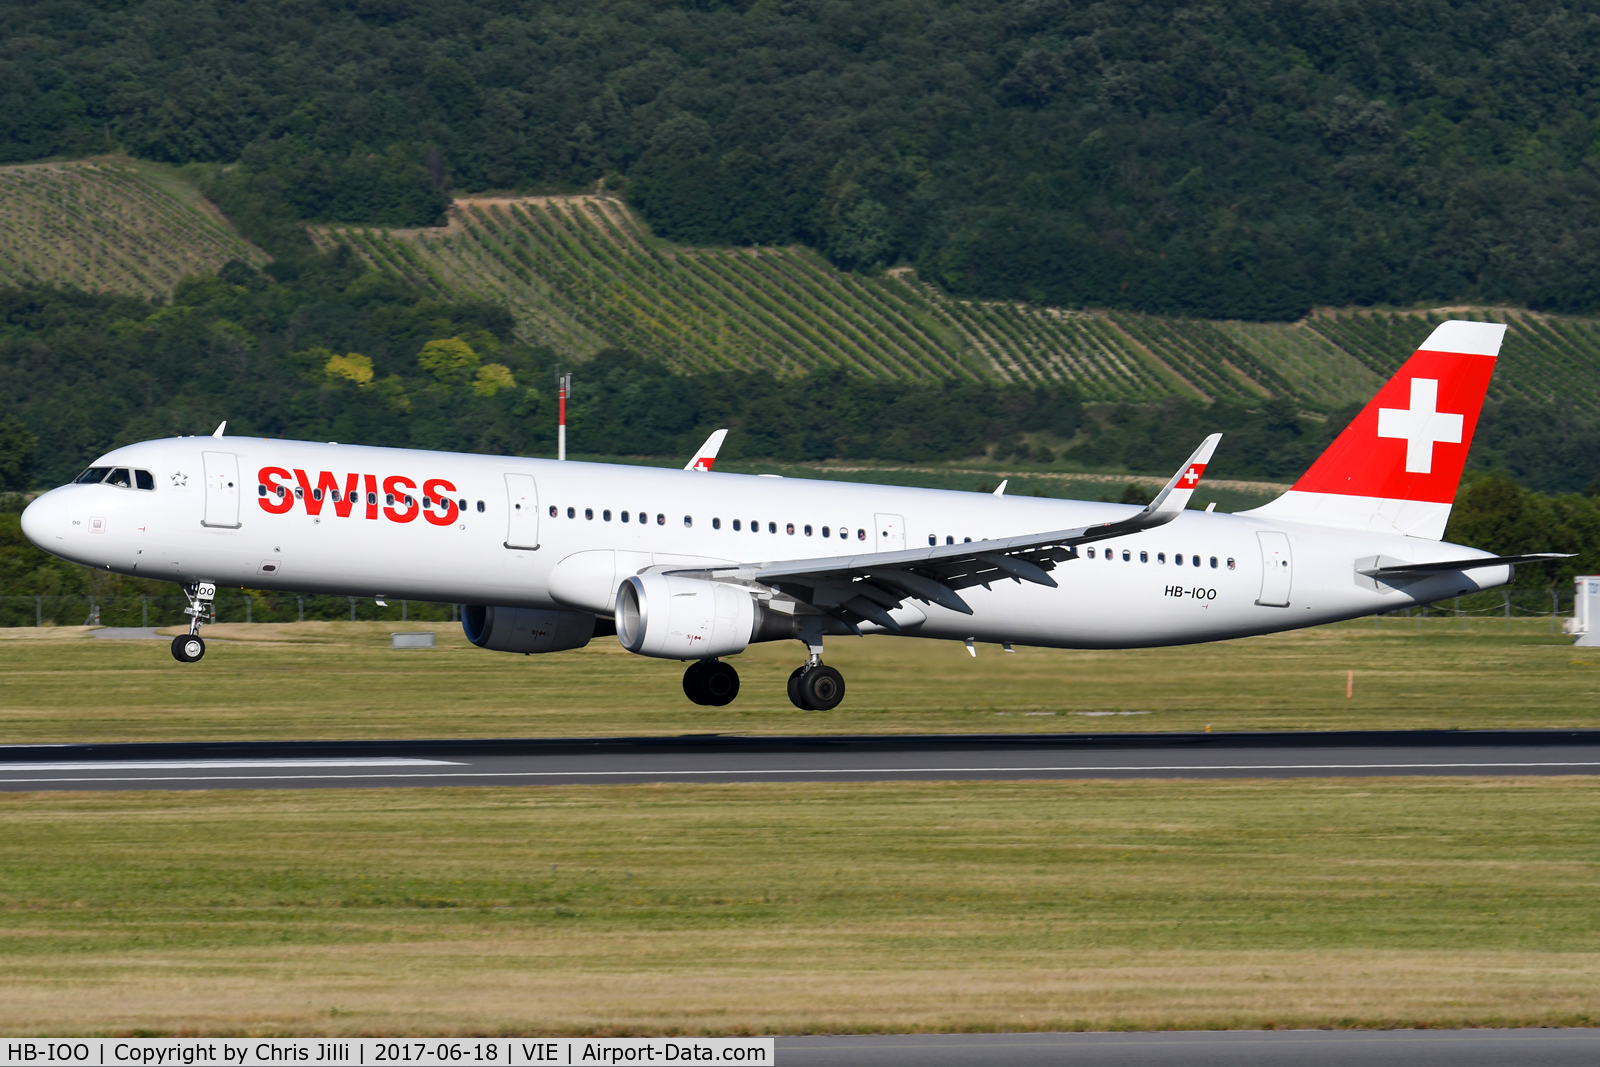 HB-IOO, 2016 Airbus A321-212 C/N 7007, Swiss